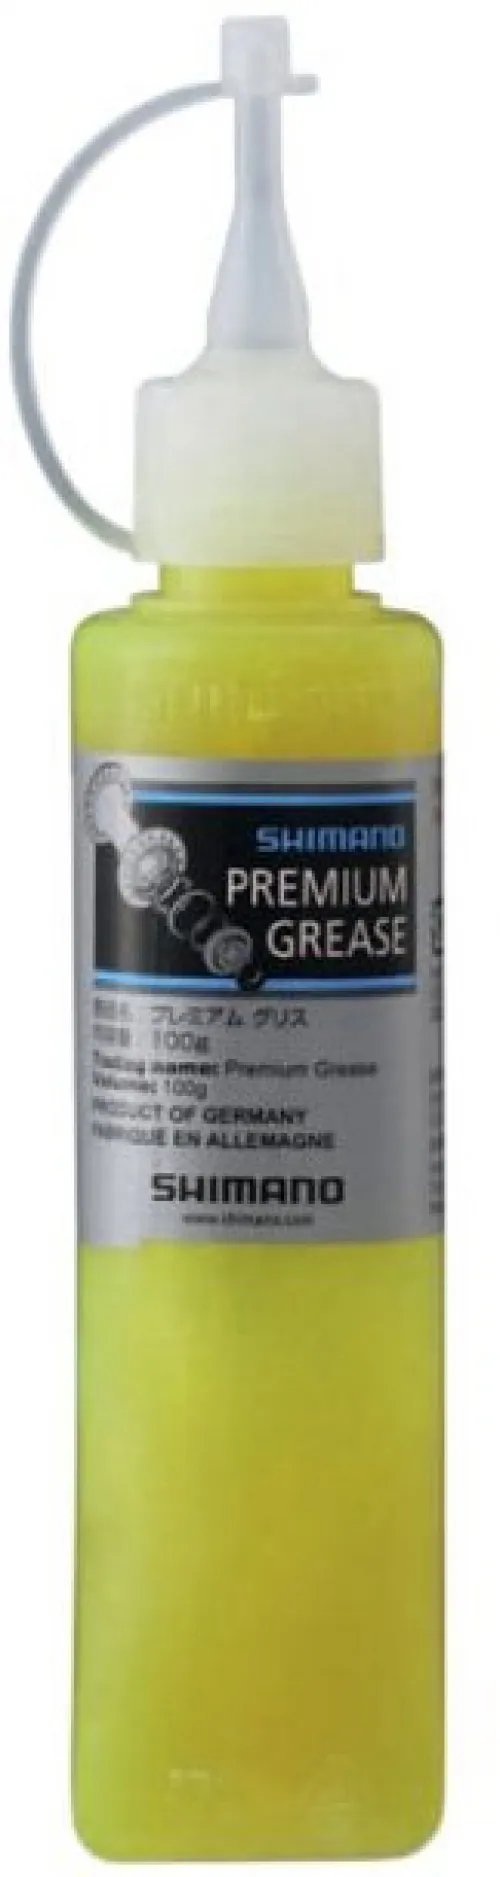 Густая смазка Shimano Premium Grease, 100мл